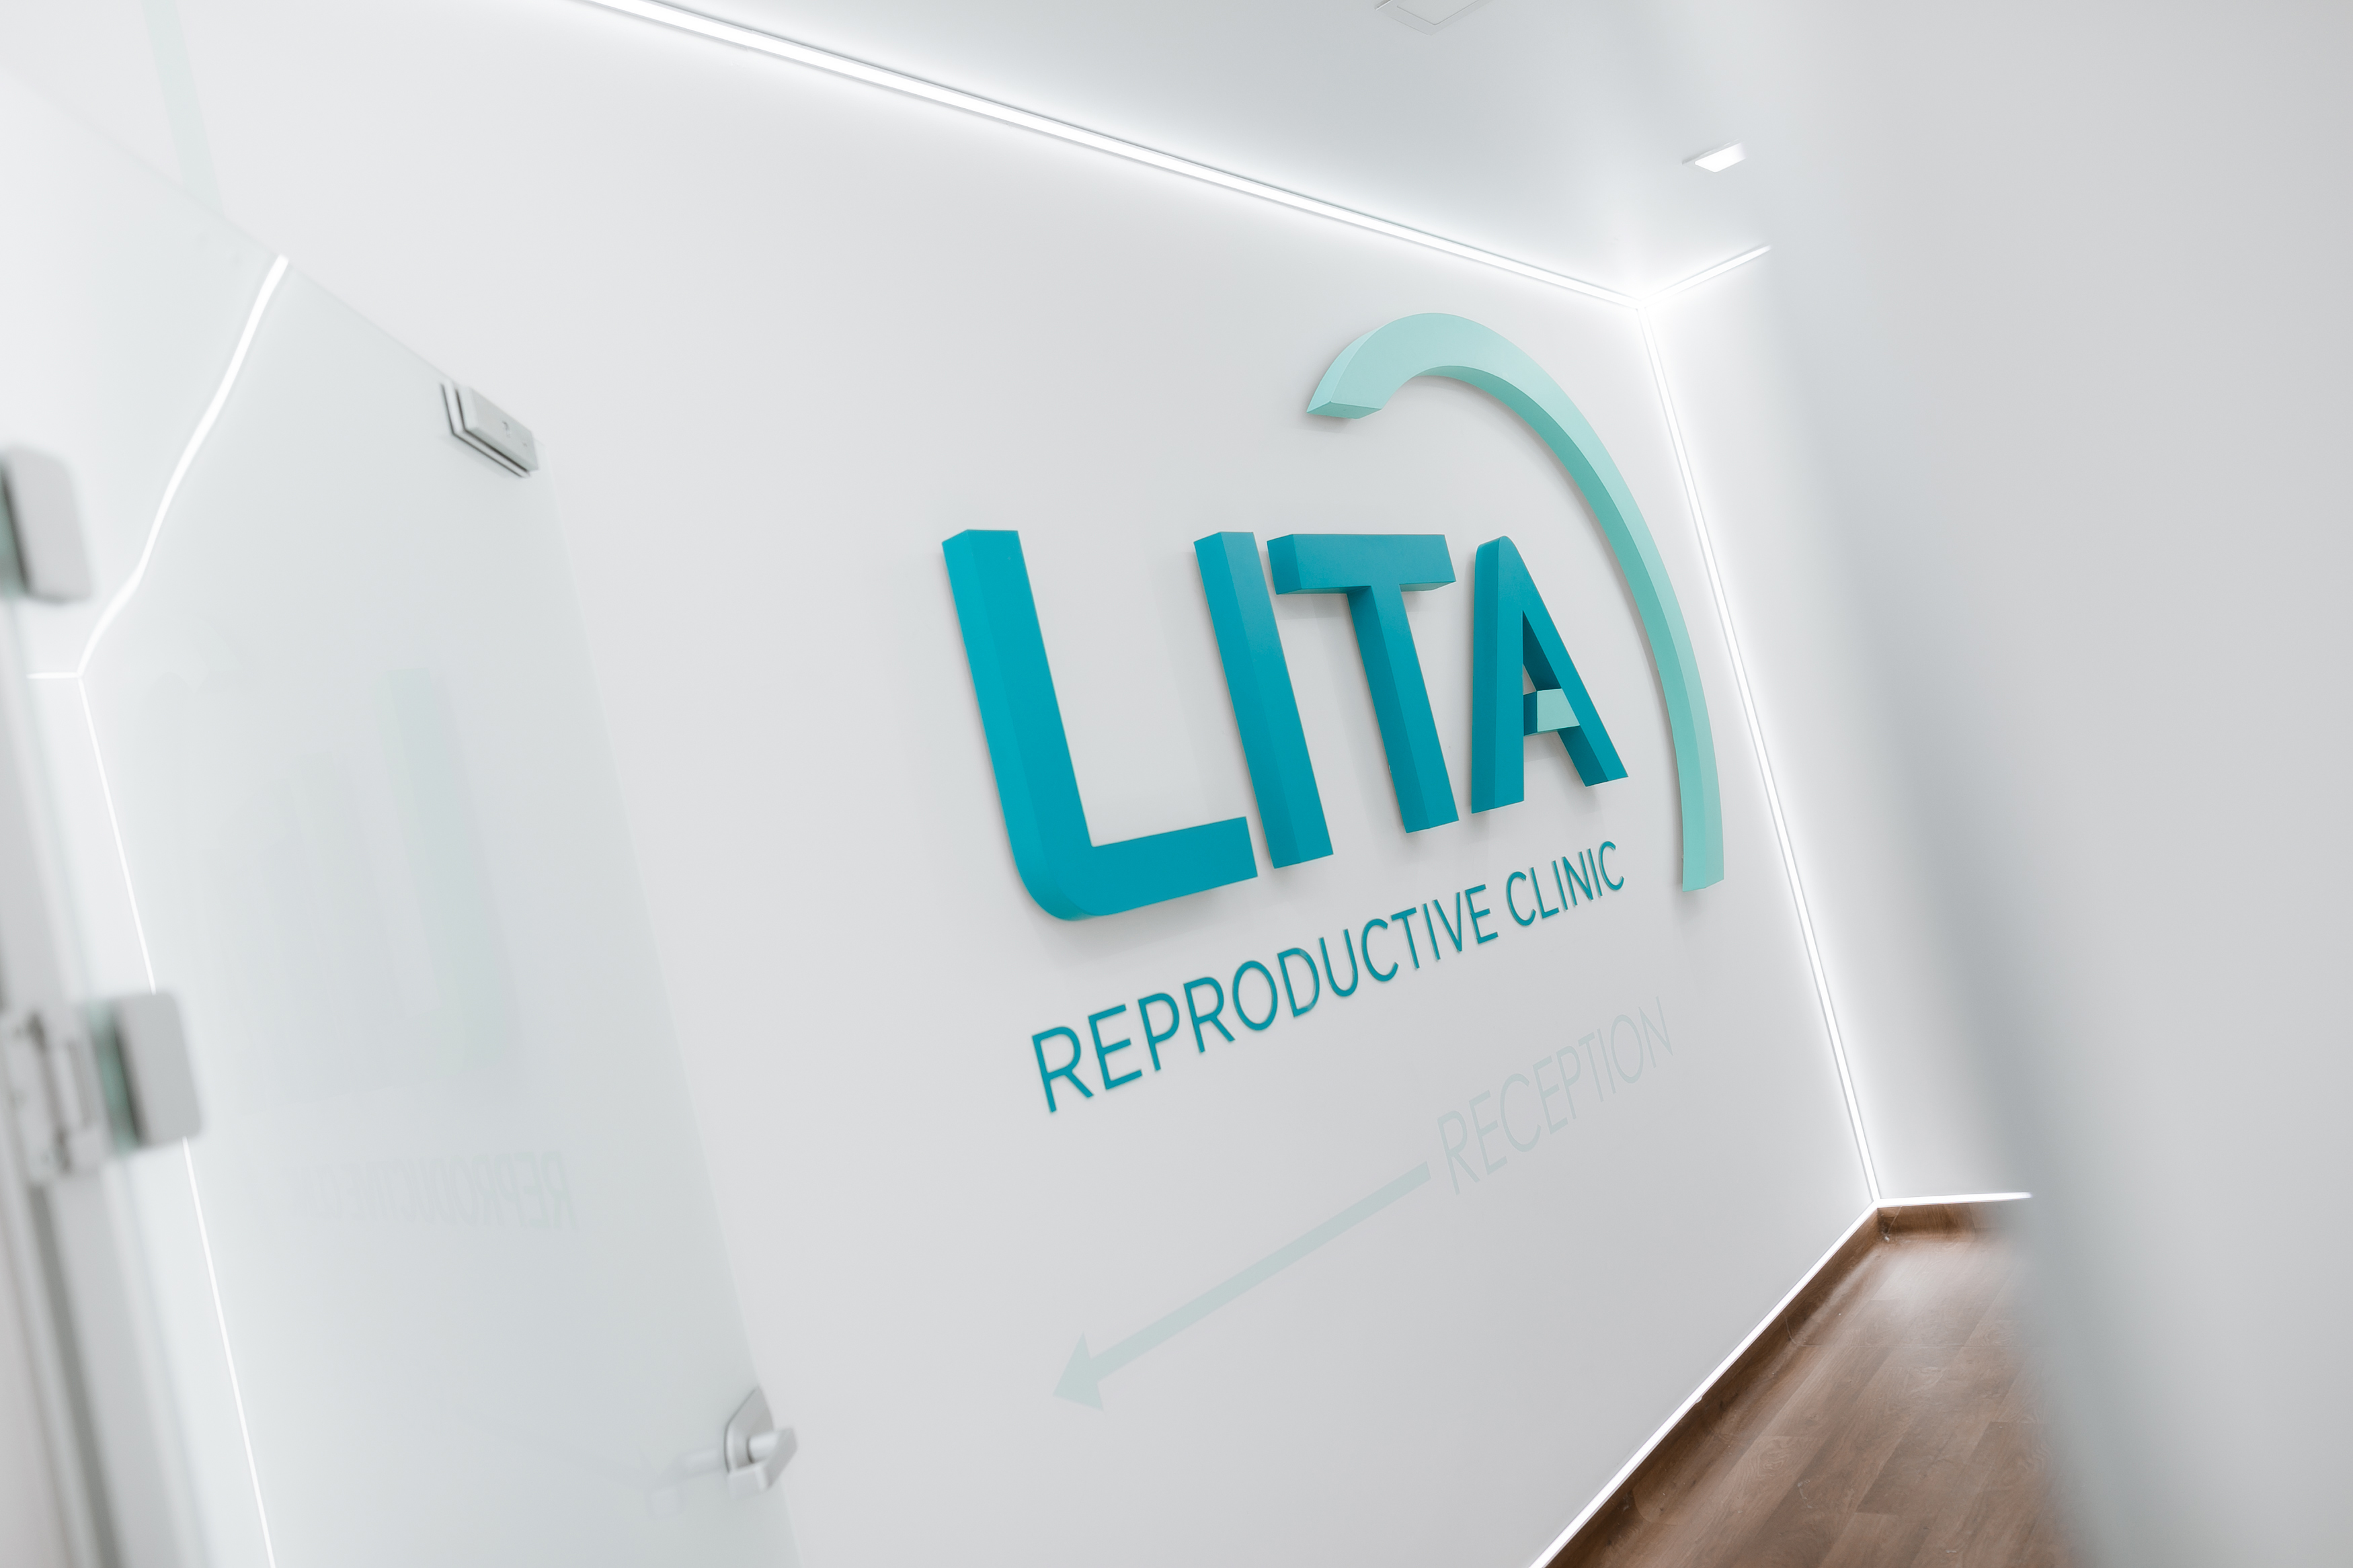 Clinic of reproductive medicine "LITA"